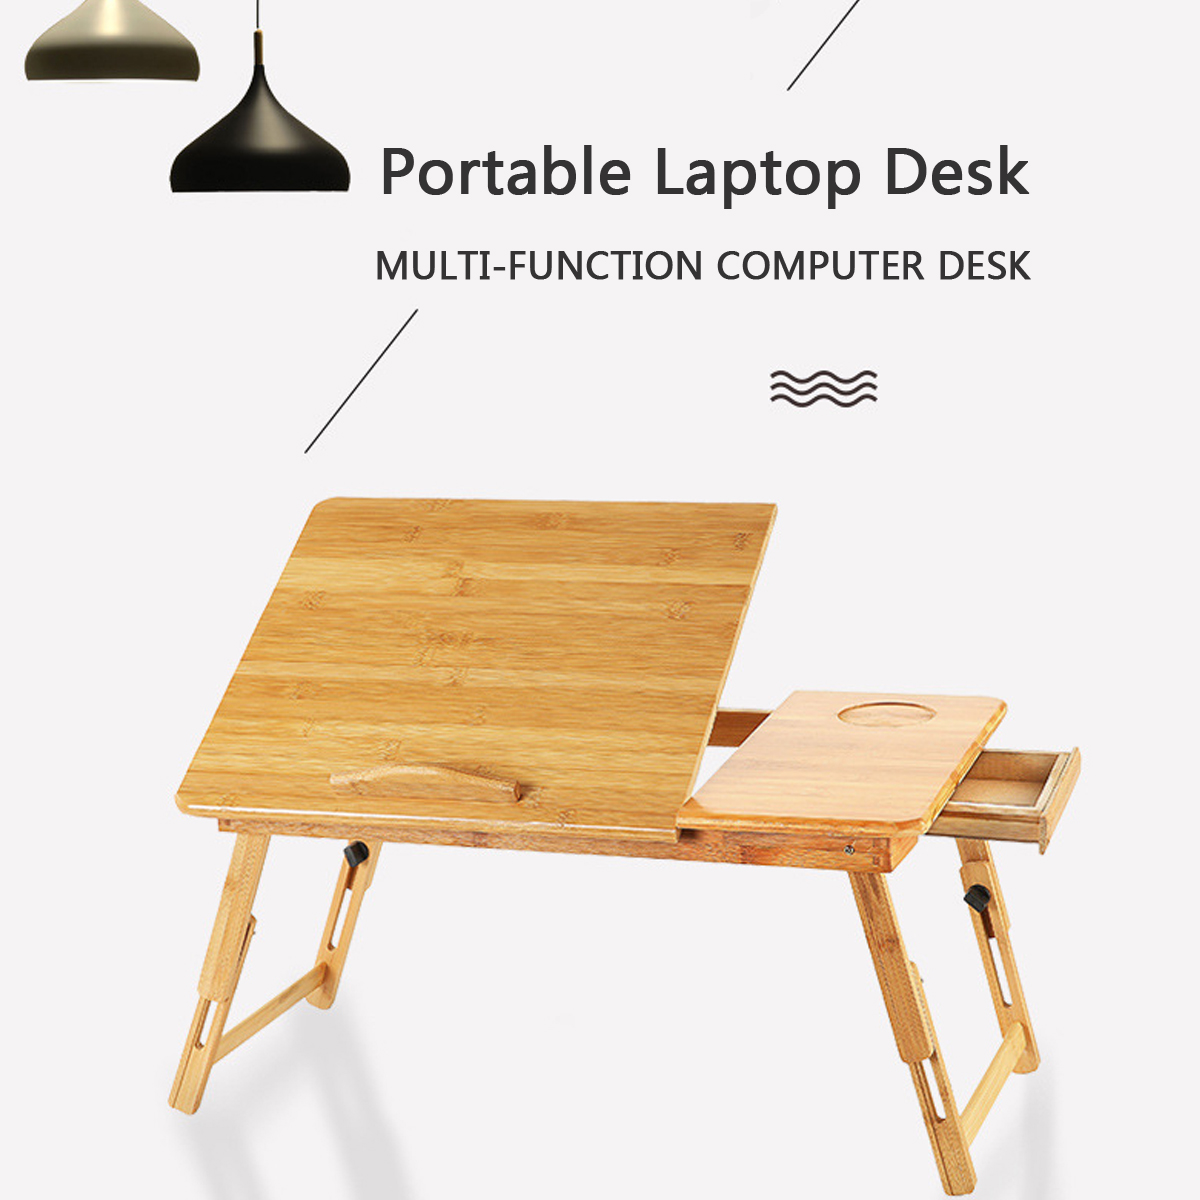 Adjustable-Laptop-Desk-Large-Bed-Tray-Tilting-Top-Foldable-Table-Multi-tasking-Stand-Breakfast-Servi-1547679-2